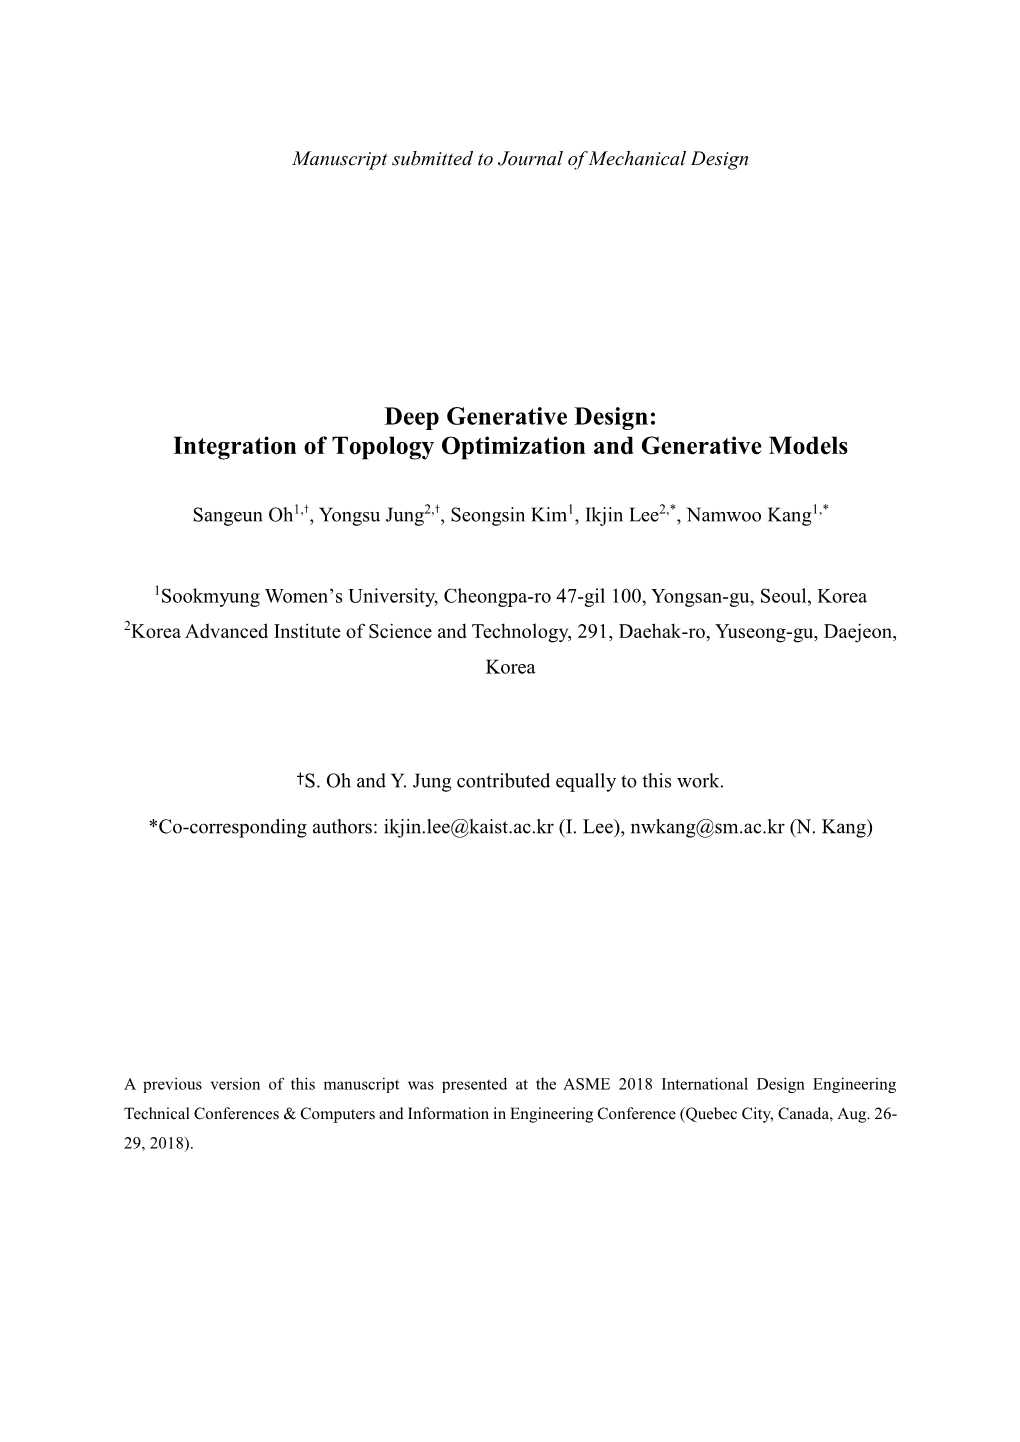 Integration of Topology Optimization and Generative Models